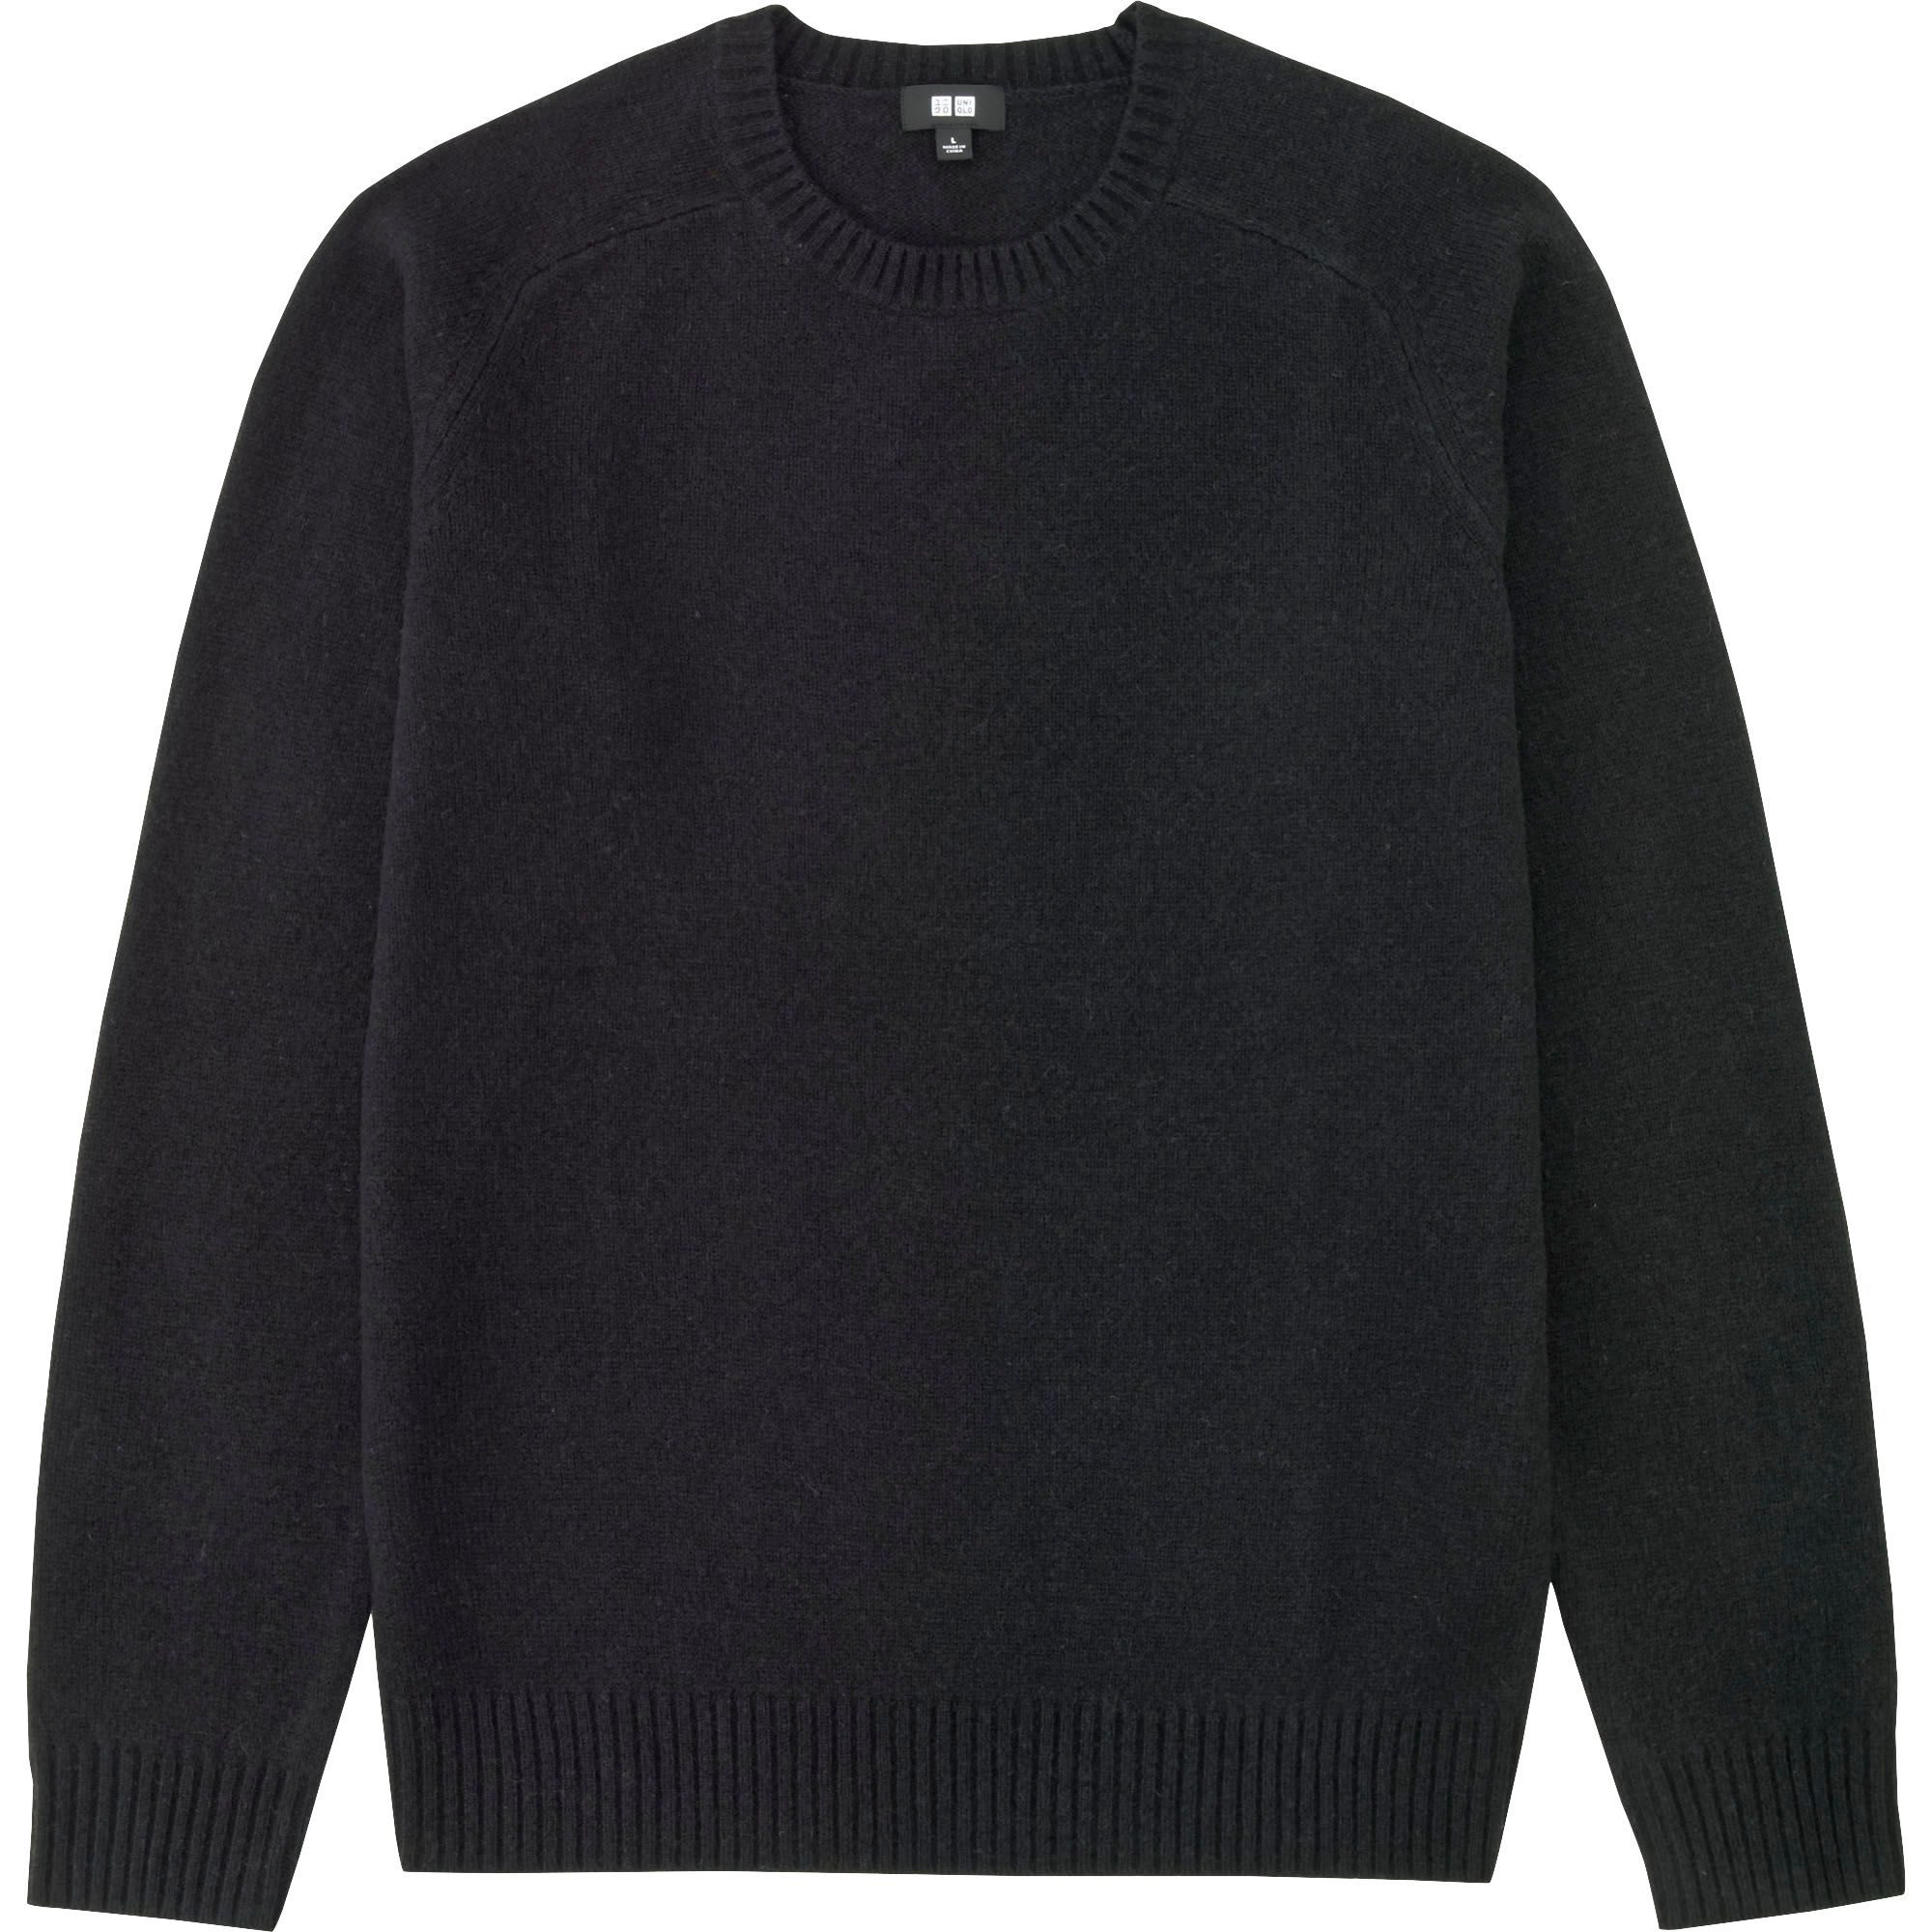 Lyst - Uniqlo Men Lambswool Crewneck Sweater in Black for Men